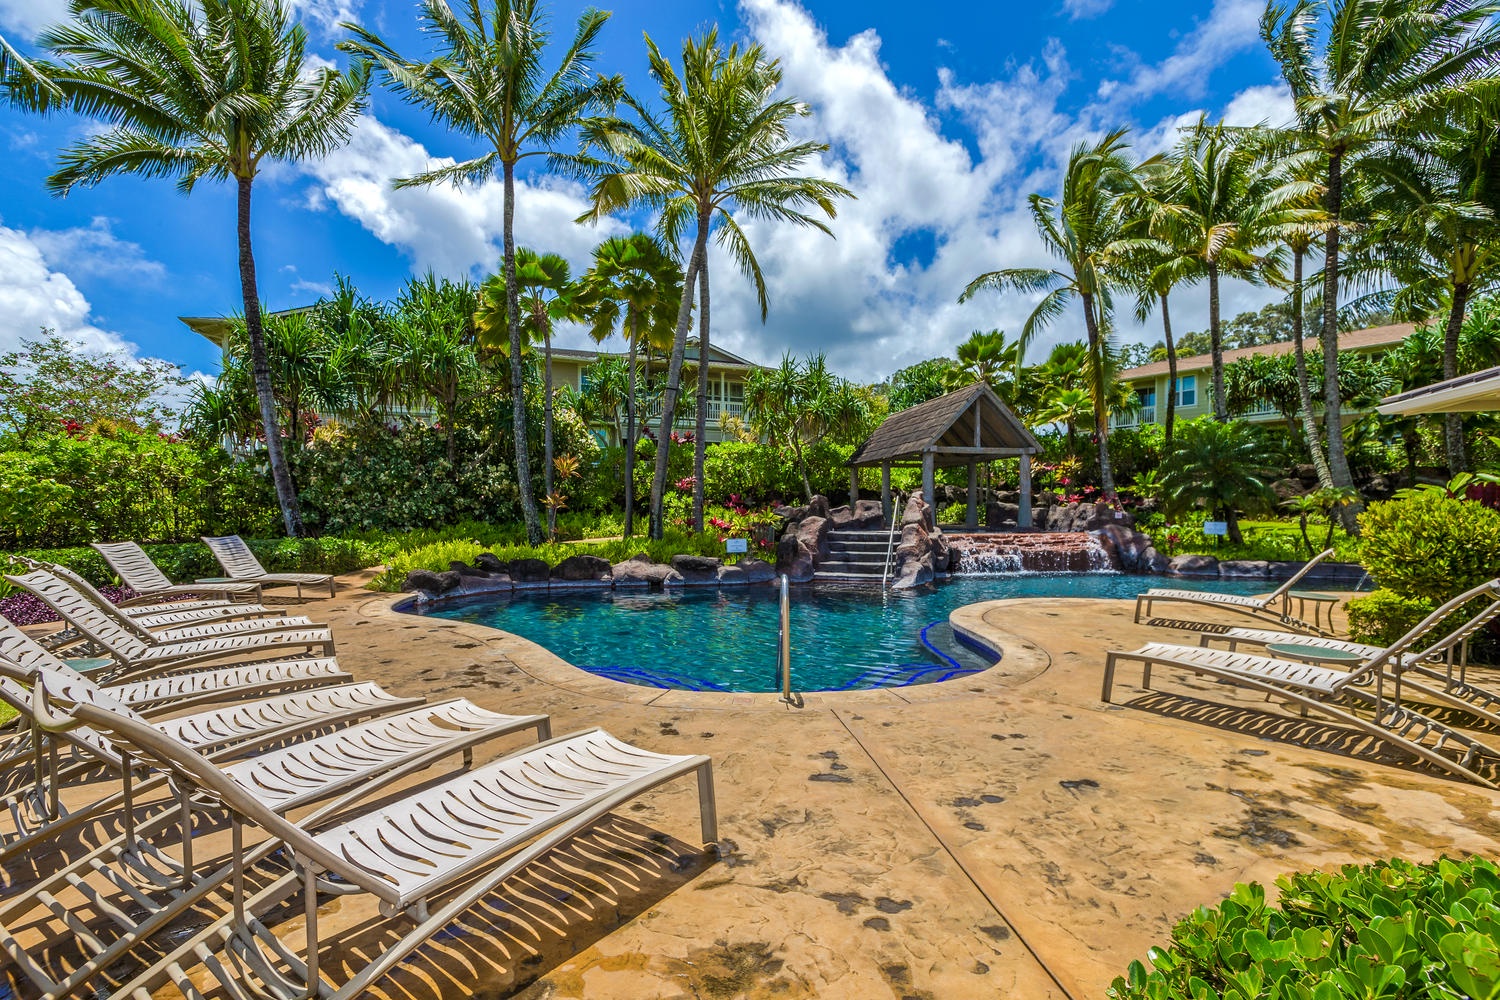 Princeville Vacation Rentals, Villa Nalani - Lounge poolside at the community pool and spa